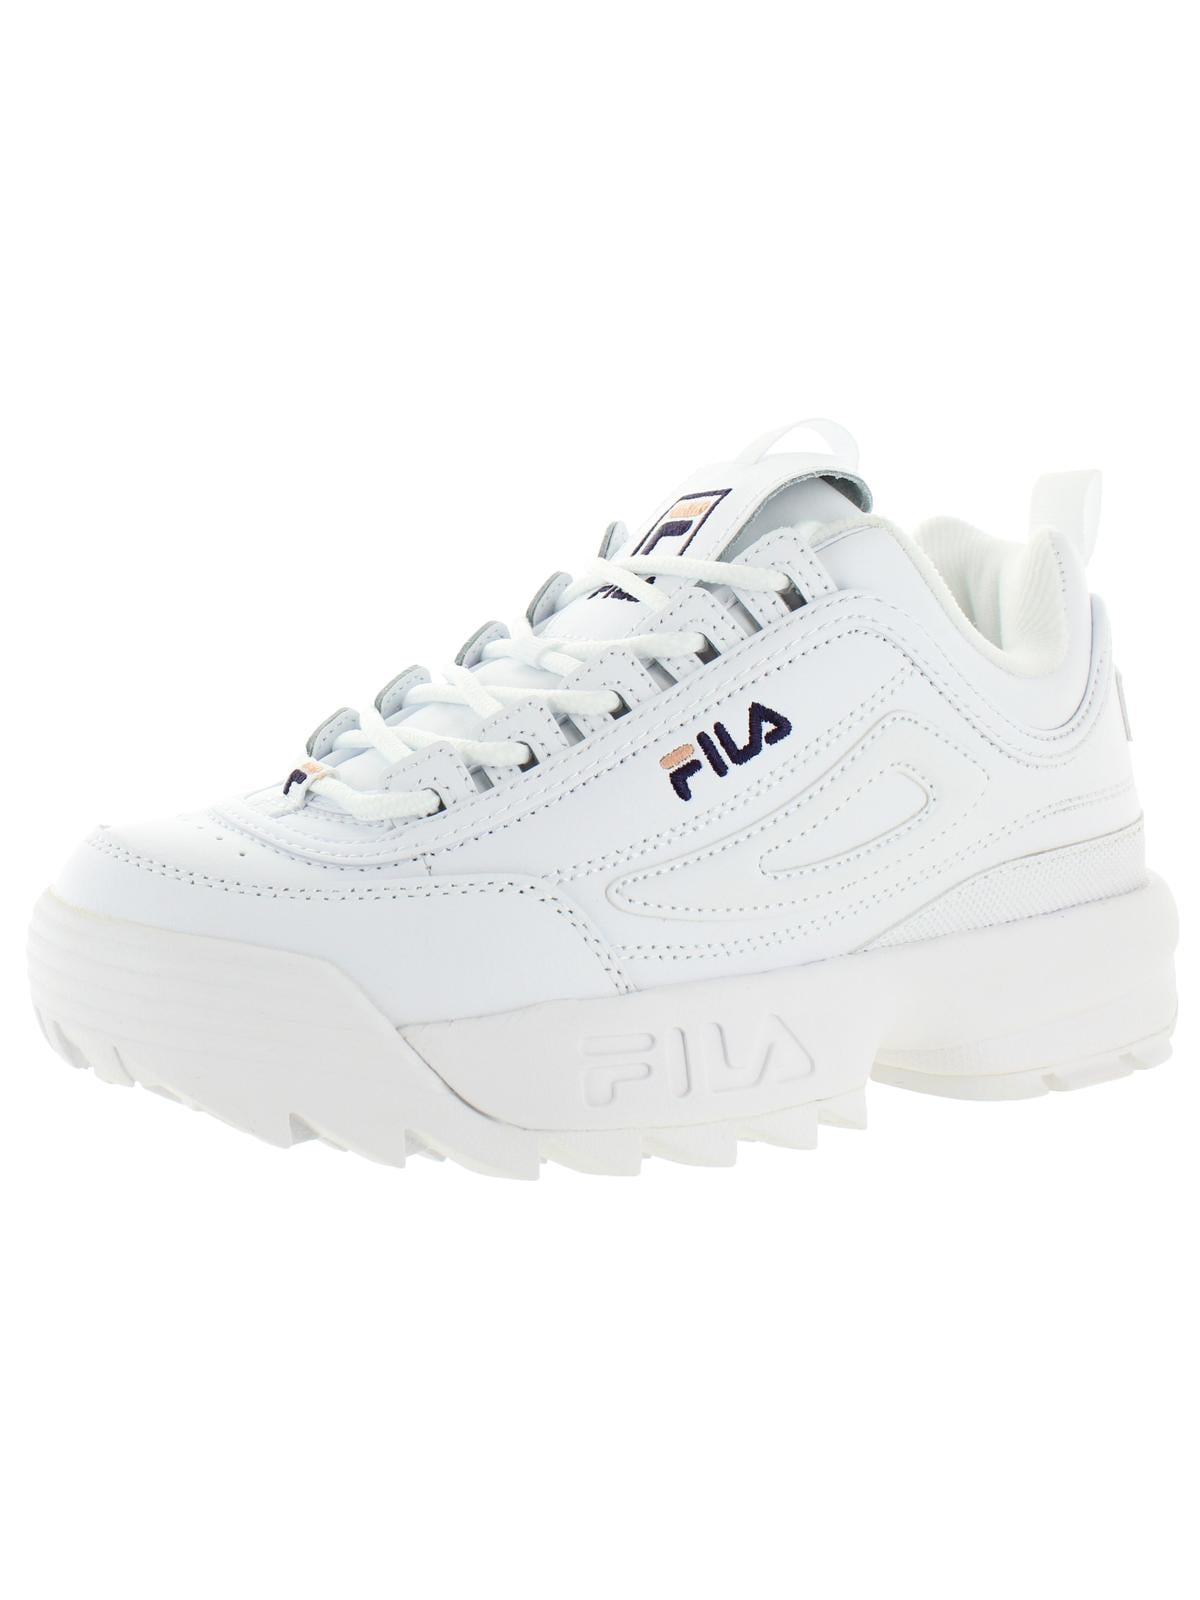 Fila Womens Disruptor II Premium Trainers Leather Sneakers - Walmart.com